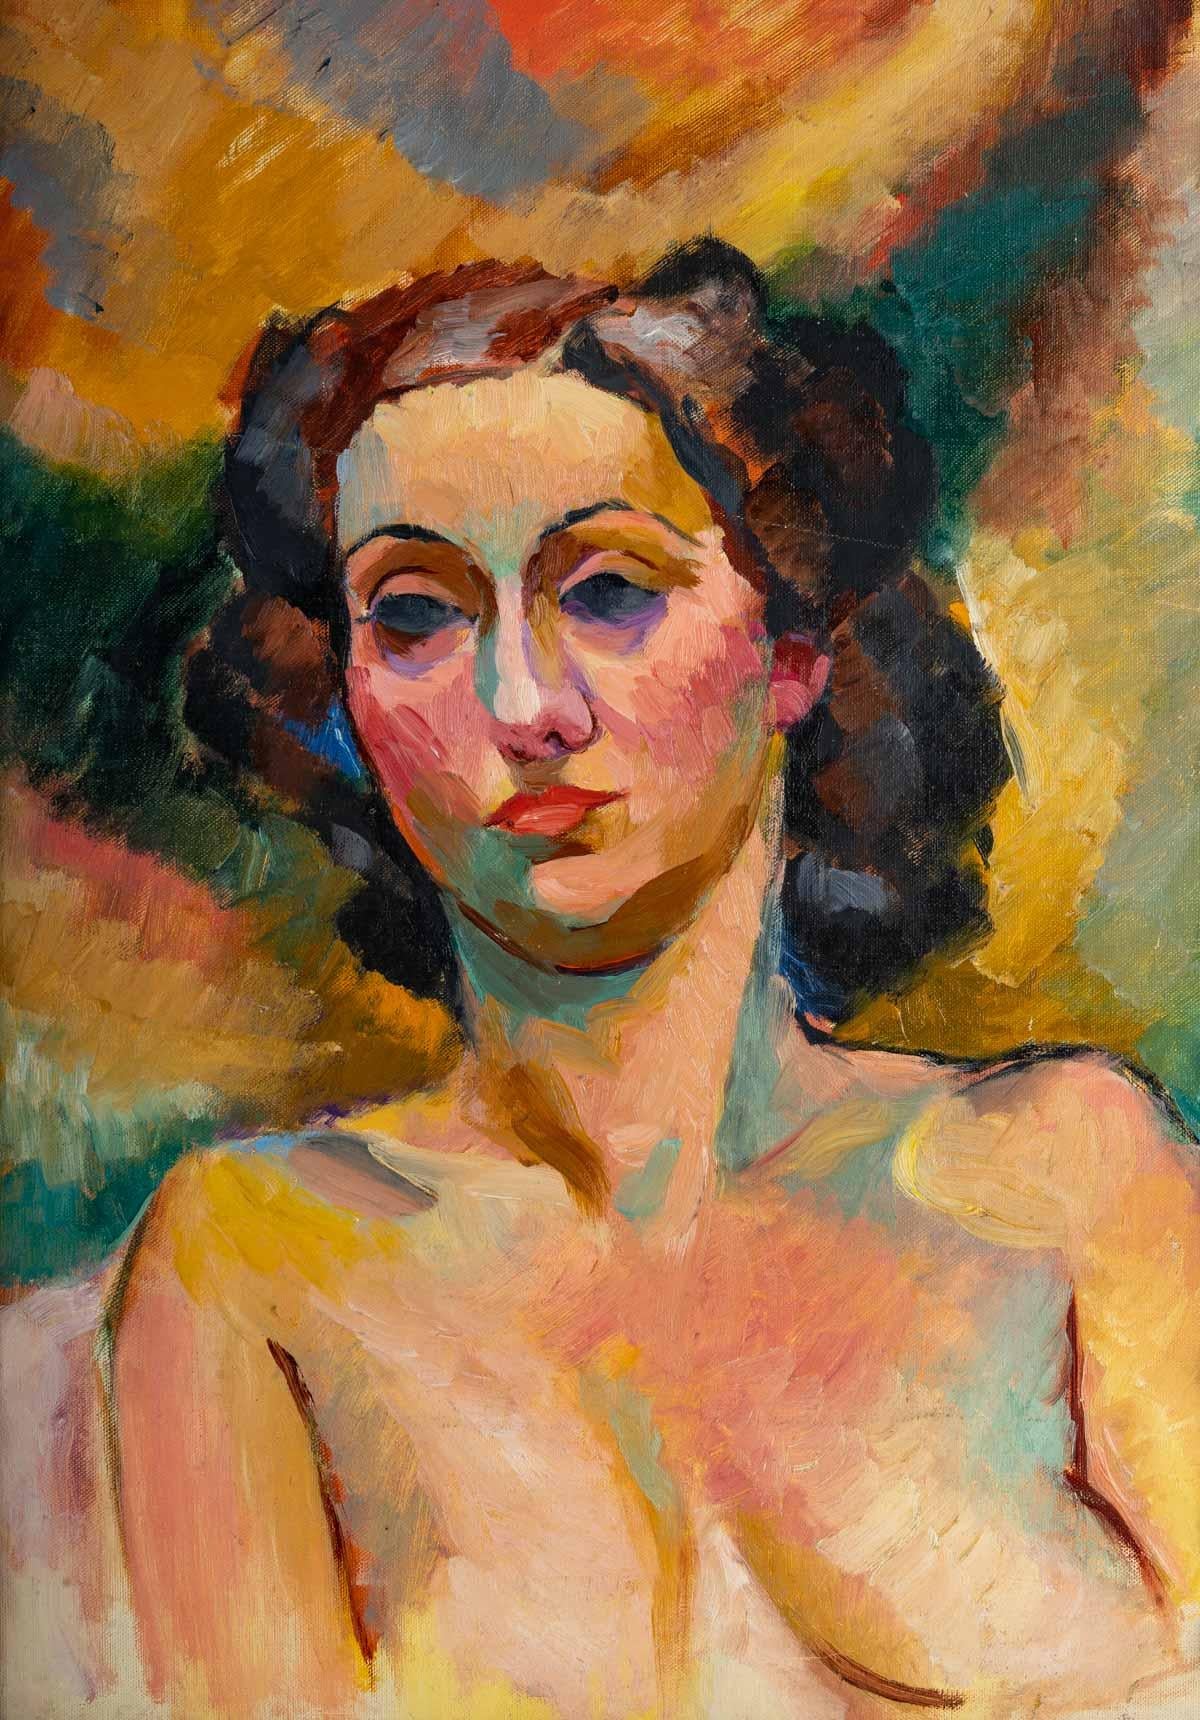 Portrait of a woman, Art Deco, 1930
Portrait of a woman, painting on wood panel with its original frame, unsigned, Art Deco, 1930.
Painting - h: 59 cm, w: 42 cm
Frame - h: 70 cm, w: 53 cm, d: 4 cm.
 